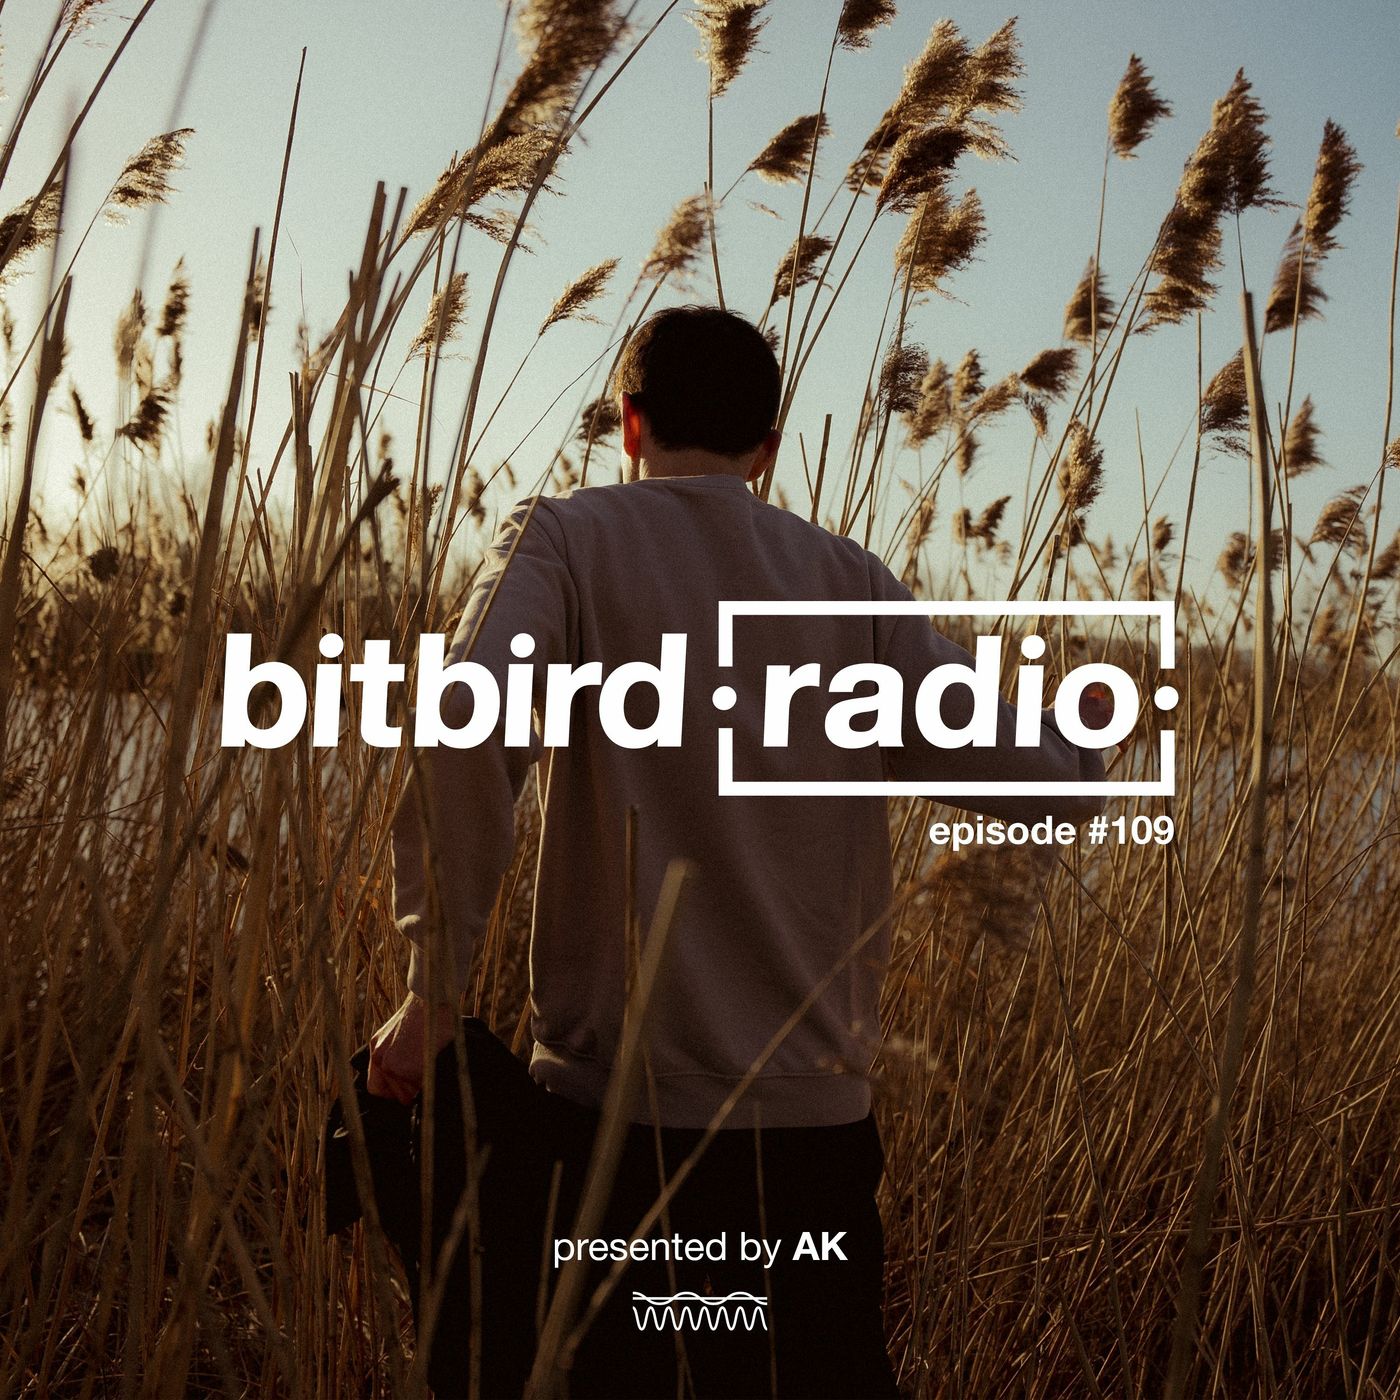 AK Presents: bitbird radio #109